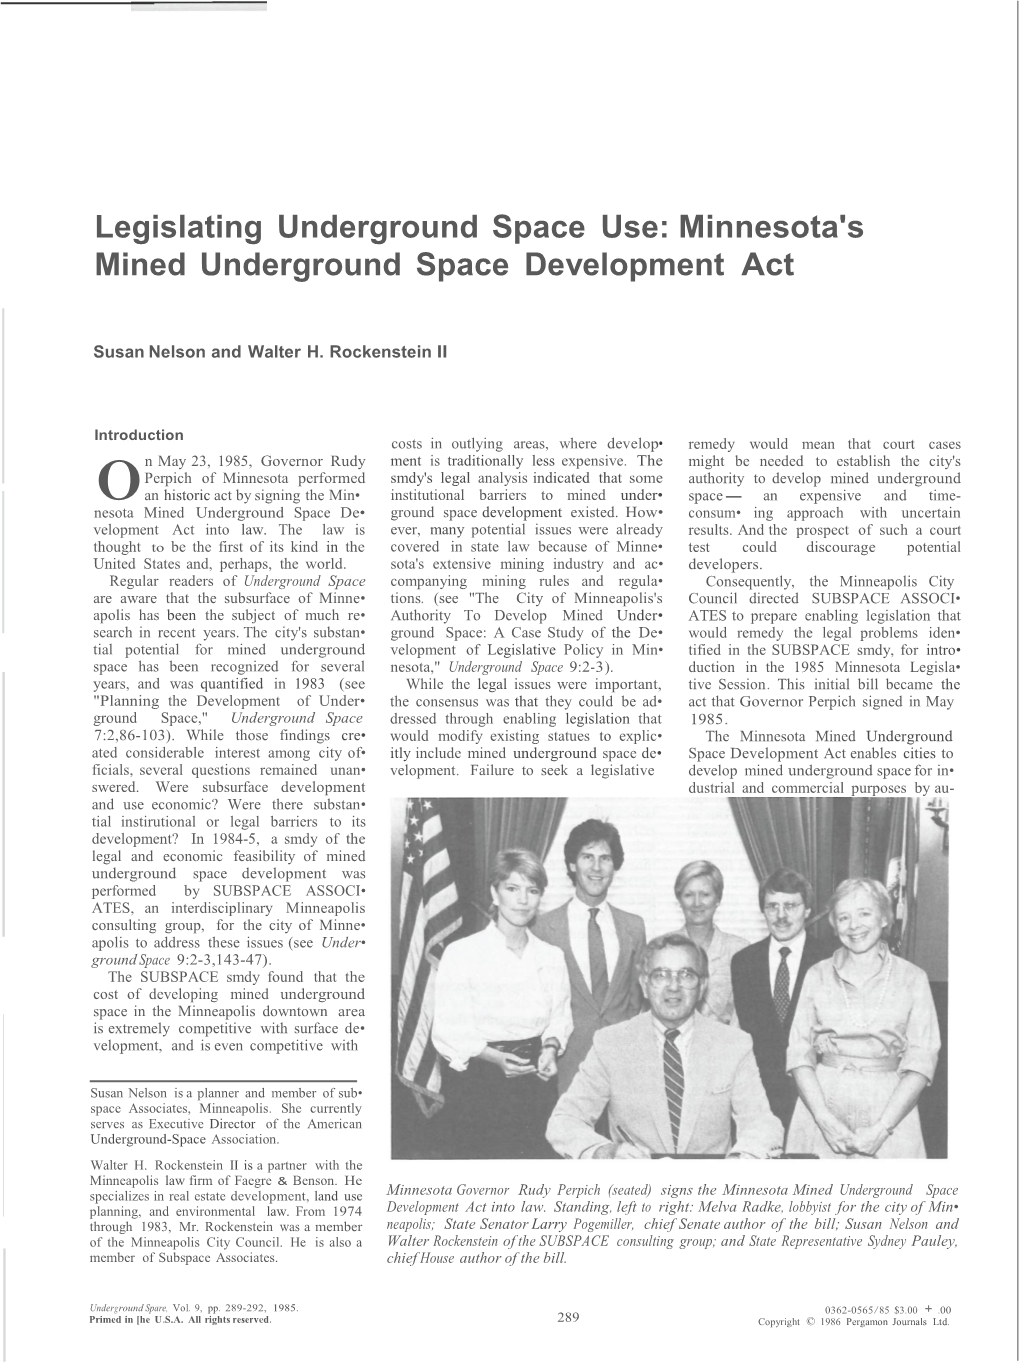 Legislating Underground Space Use: Minnesota's Mined Underground Space Development Act